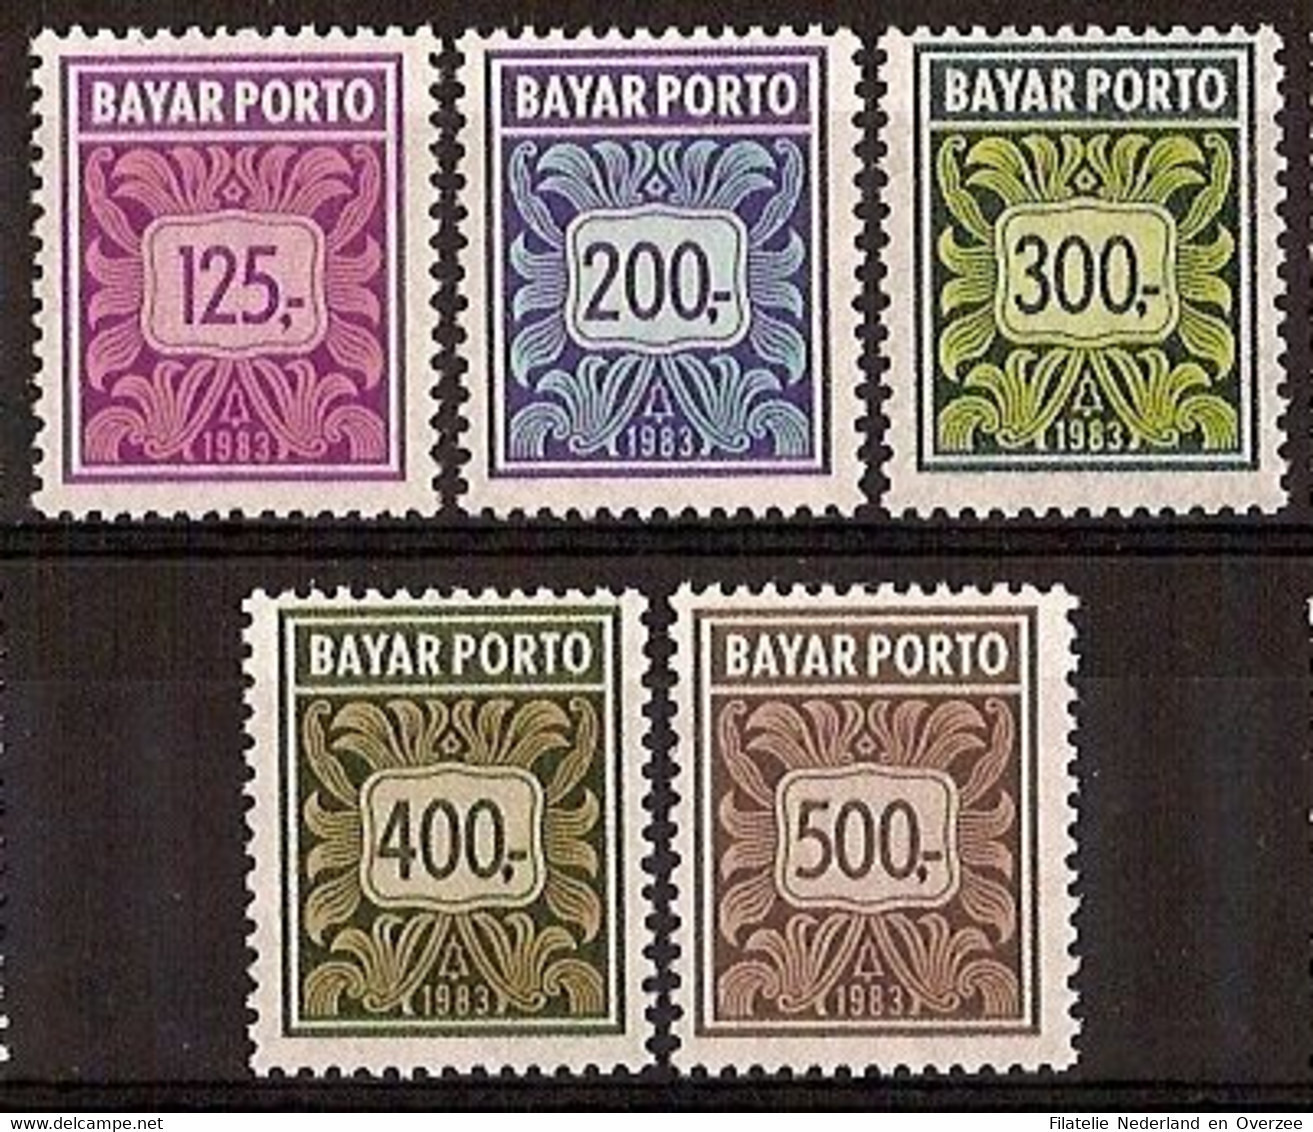 Indonesië / Indonesia 1983 Port 91/95 Postfris/MNH Tax, Due Stamp - Indonesië